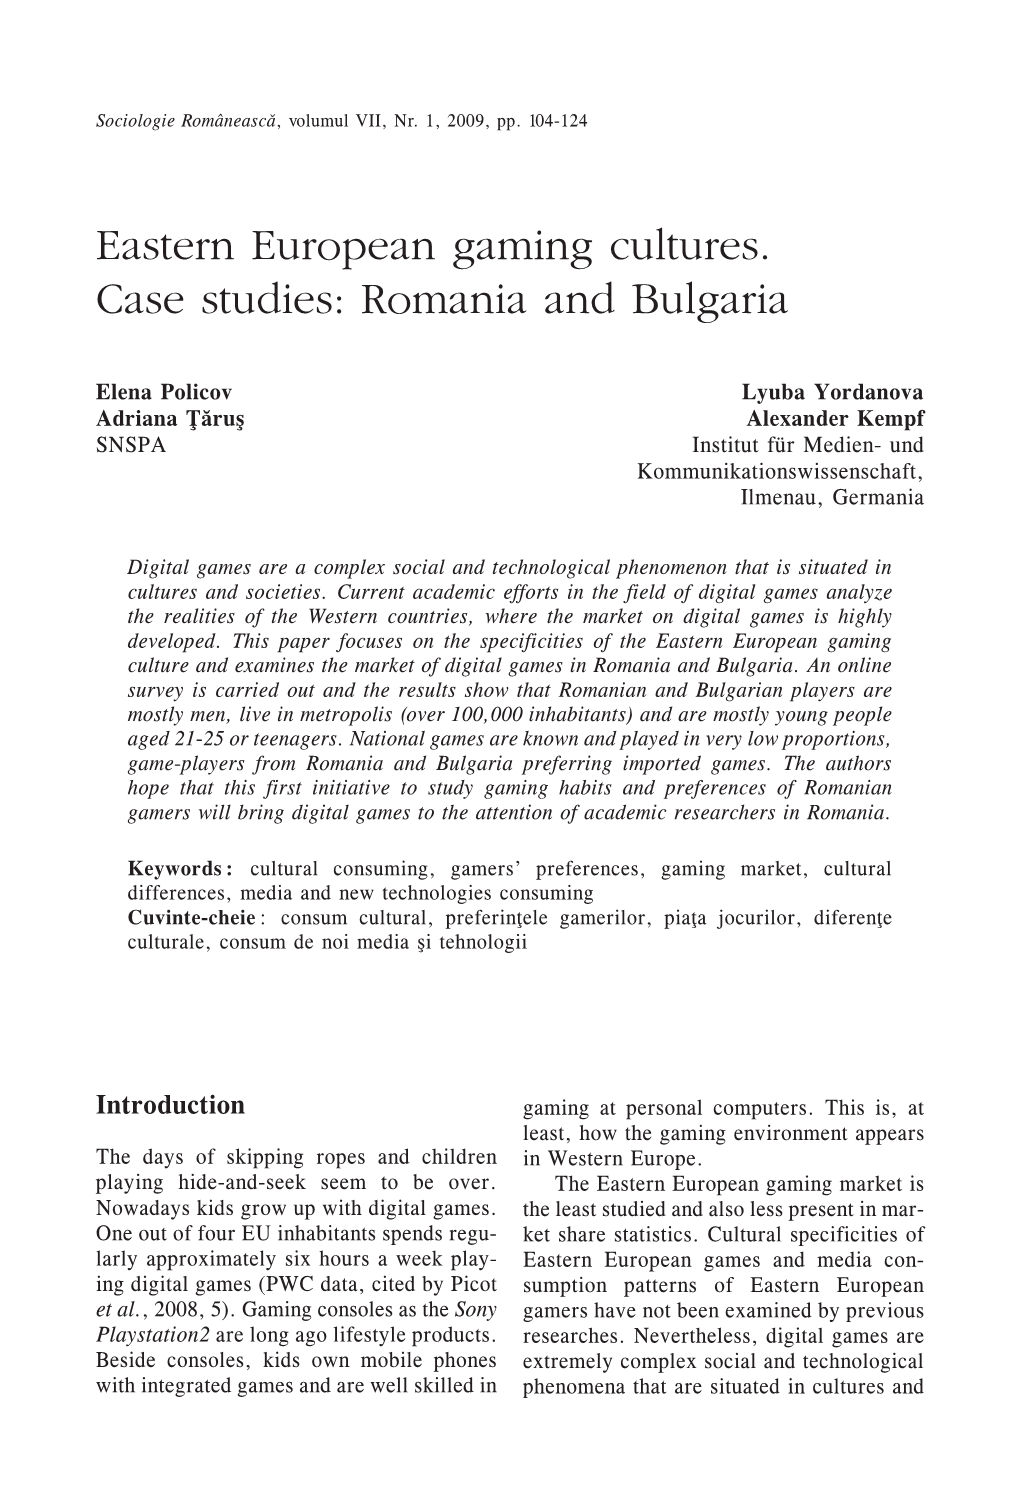 Eastern European Gaming Cultures. Case Studies: Romania and Bulgaria